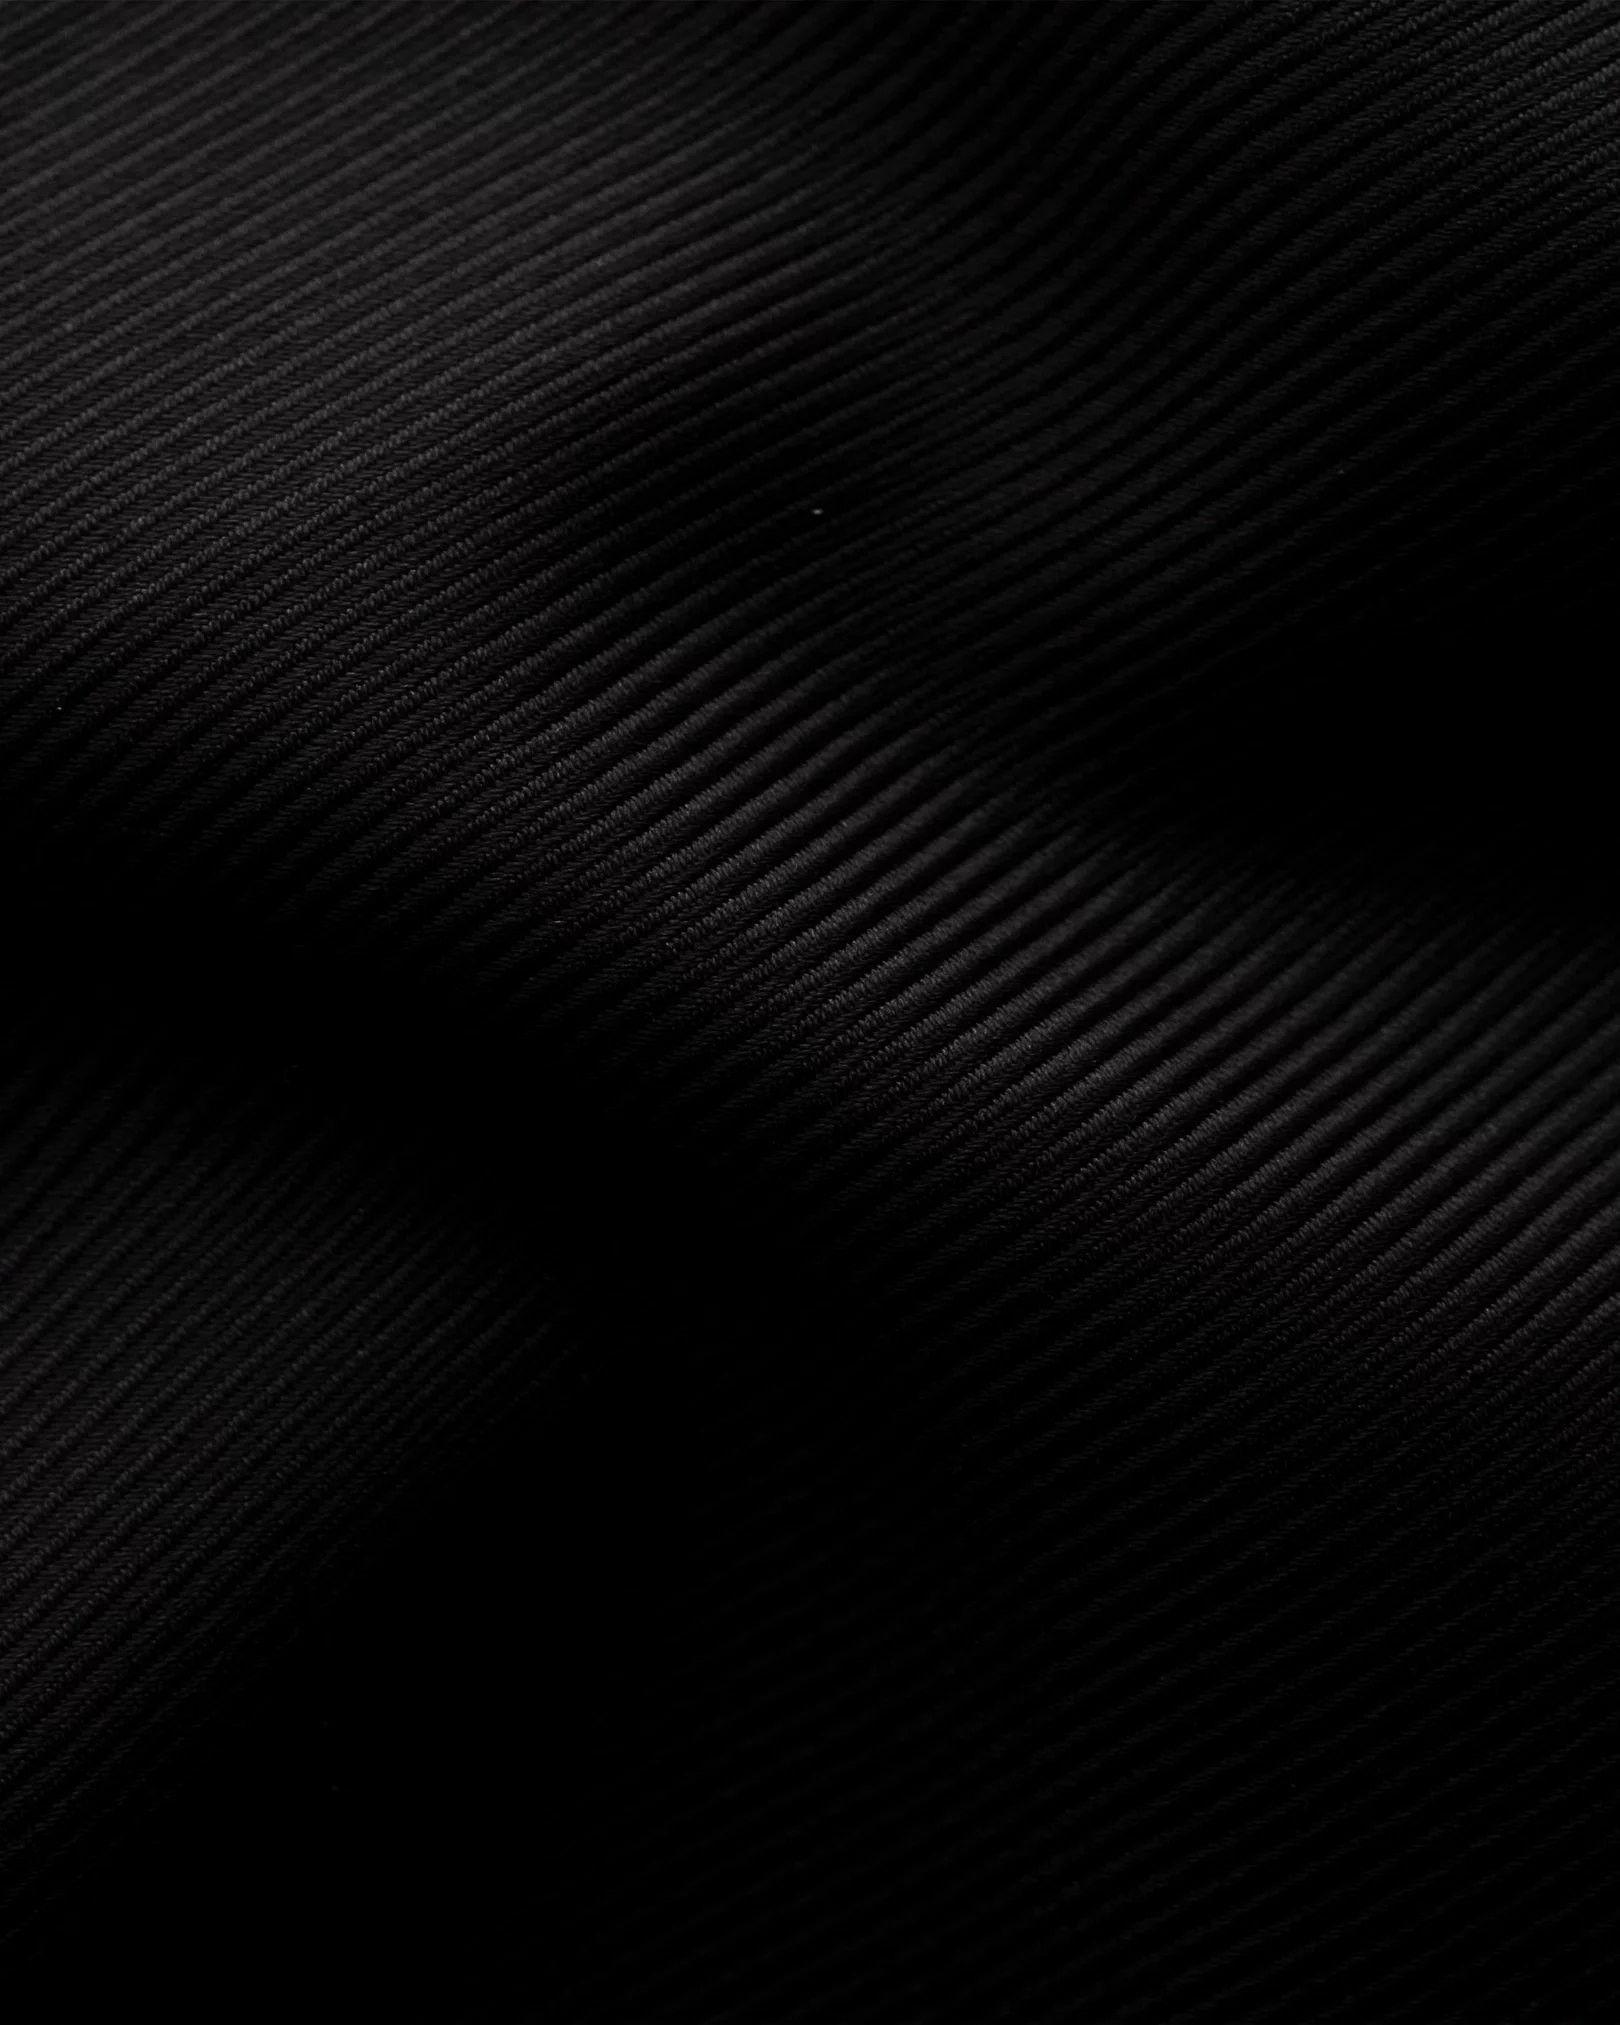 Eton - black textured twill shirt